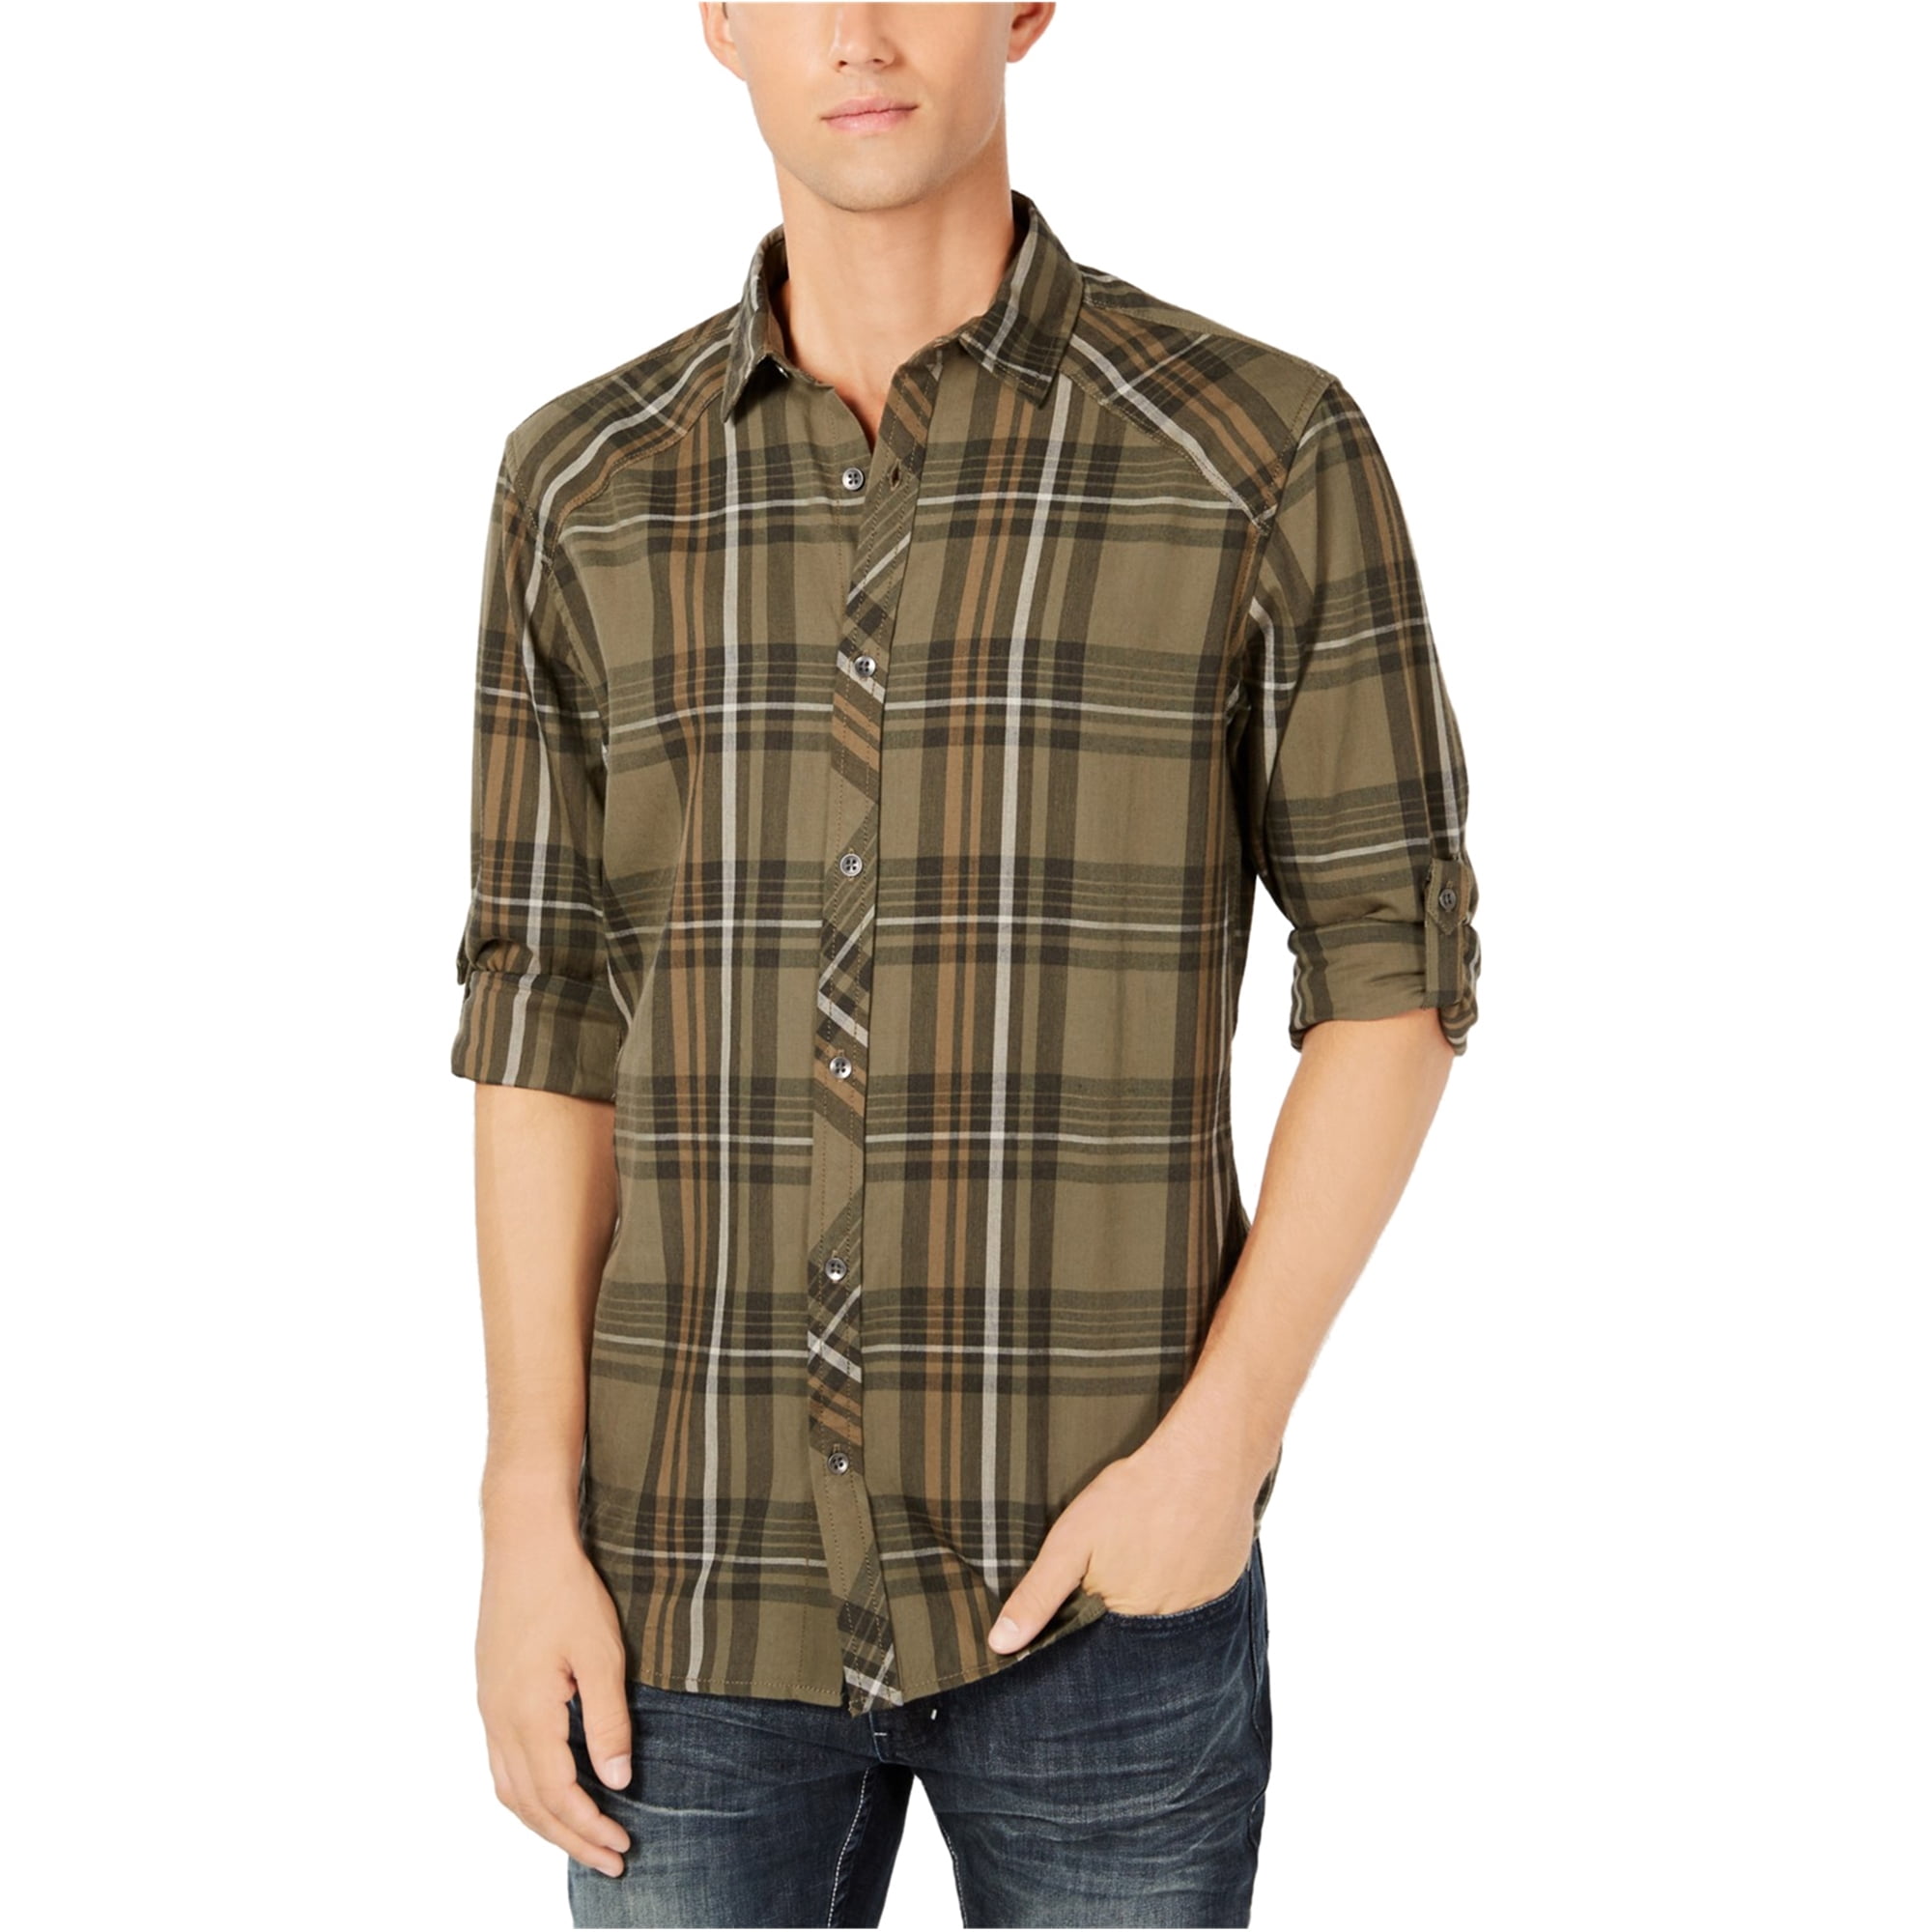 I-N-C Mens Plaid Button Up Shirt, Green, Large - Walmart.com